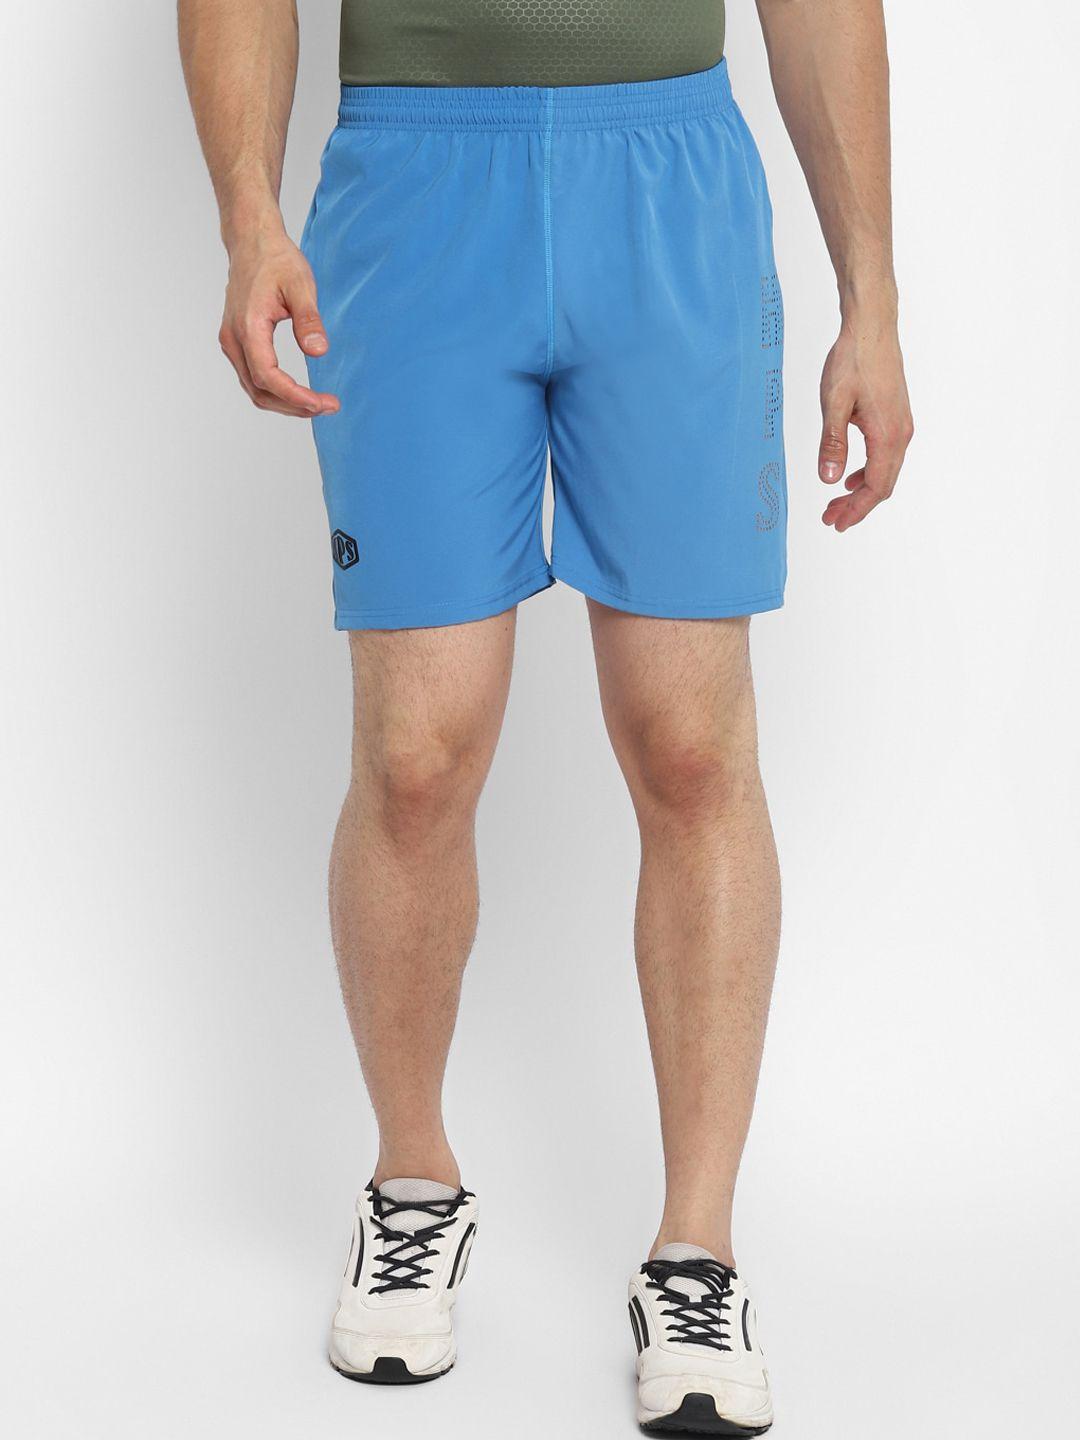 hps-sports-men-blue-running-sports-shorts